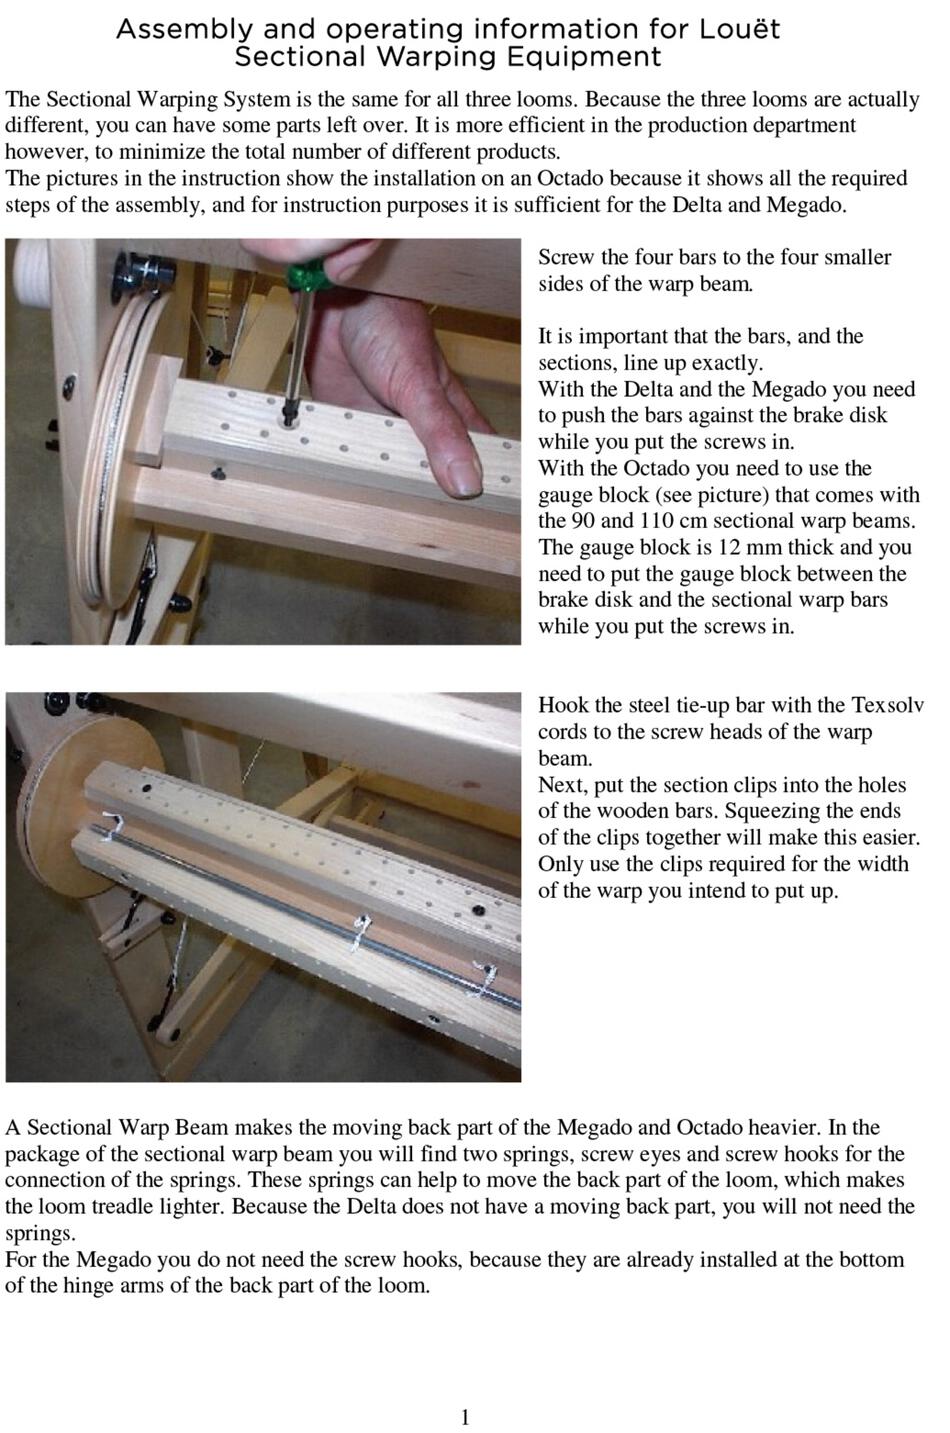 Weaving Equipment Louet Information on Sectional Warping